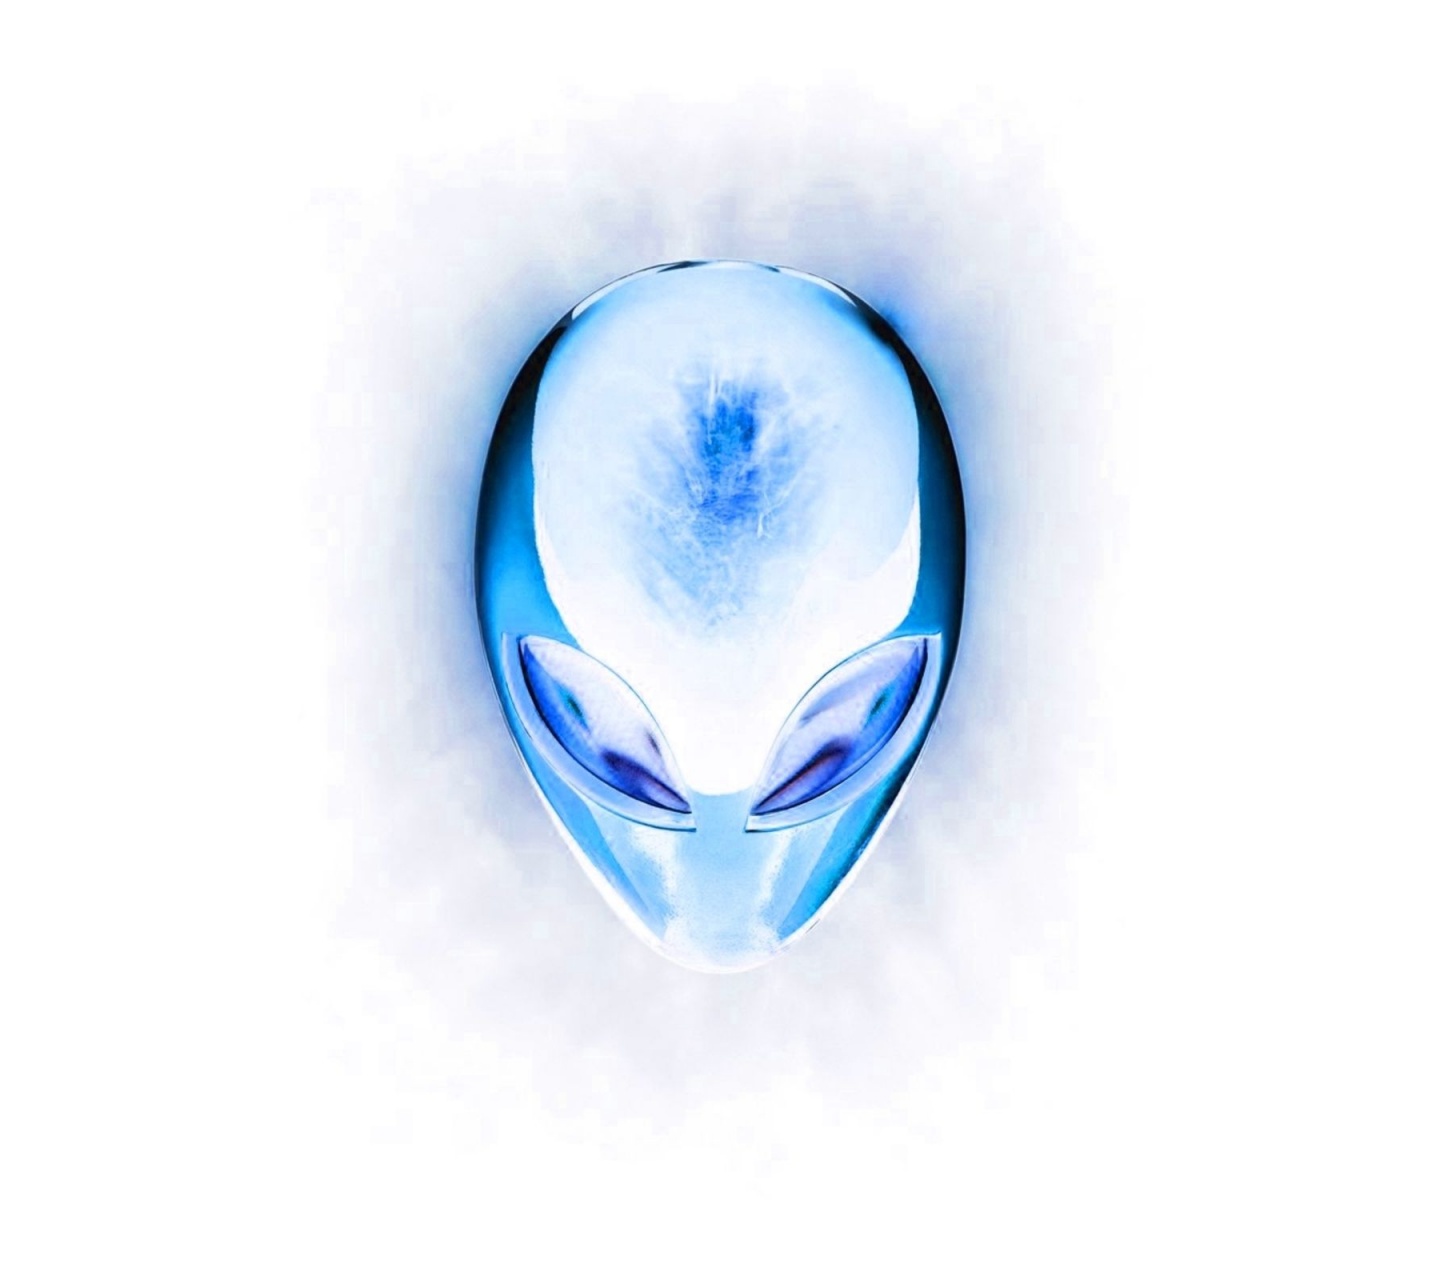 Alienware Logo Brand Whiet Computer